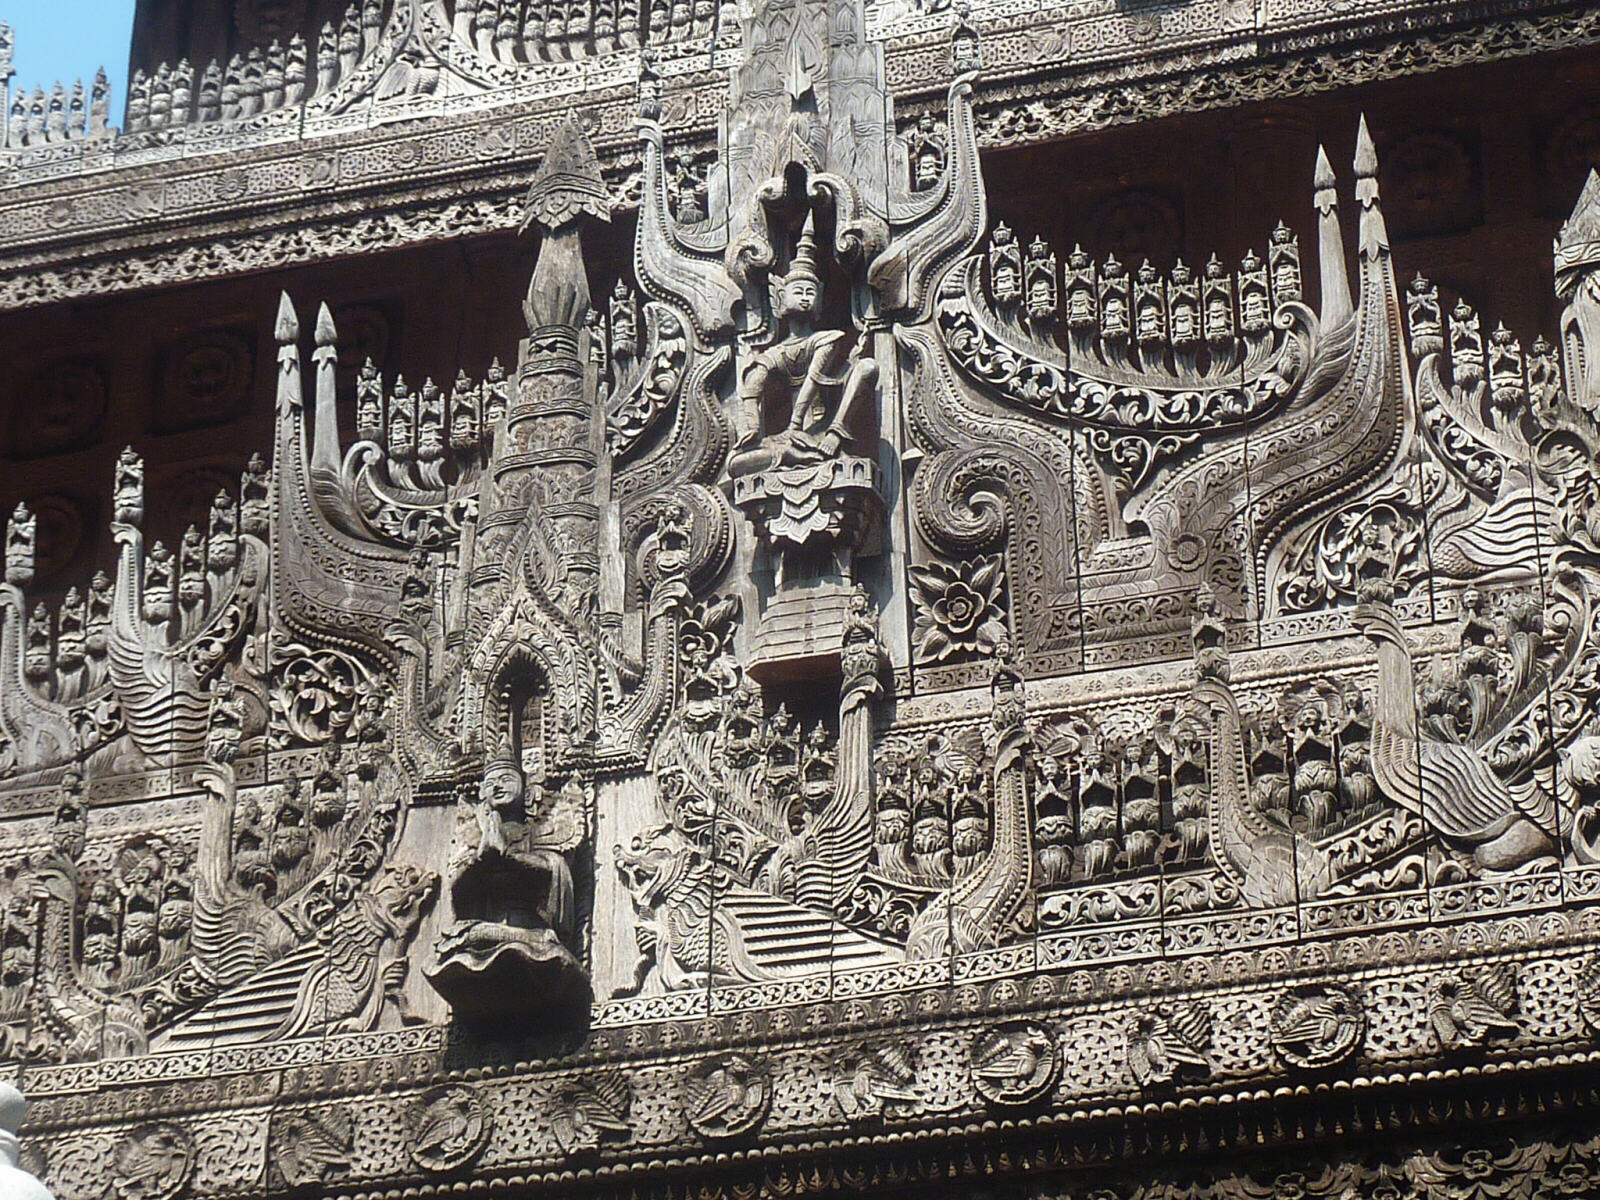 The wooden Shwenandaw monastery on Mandalay hill